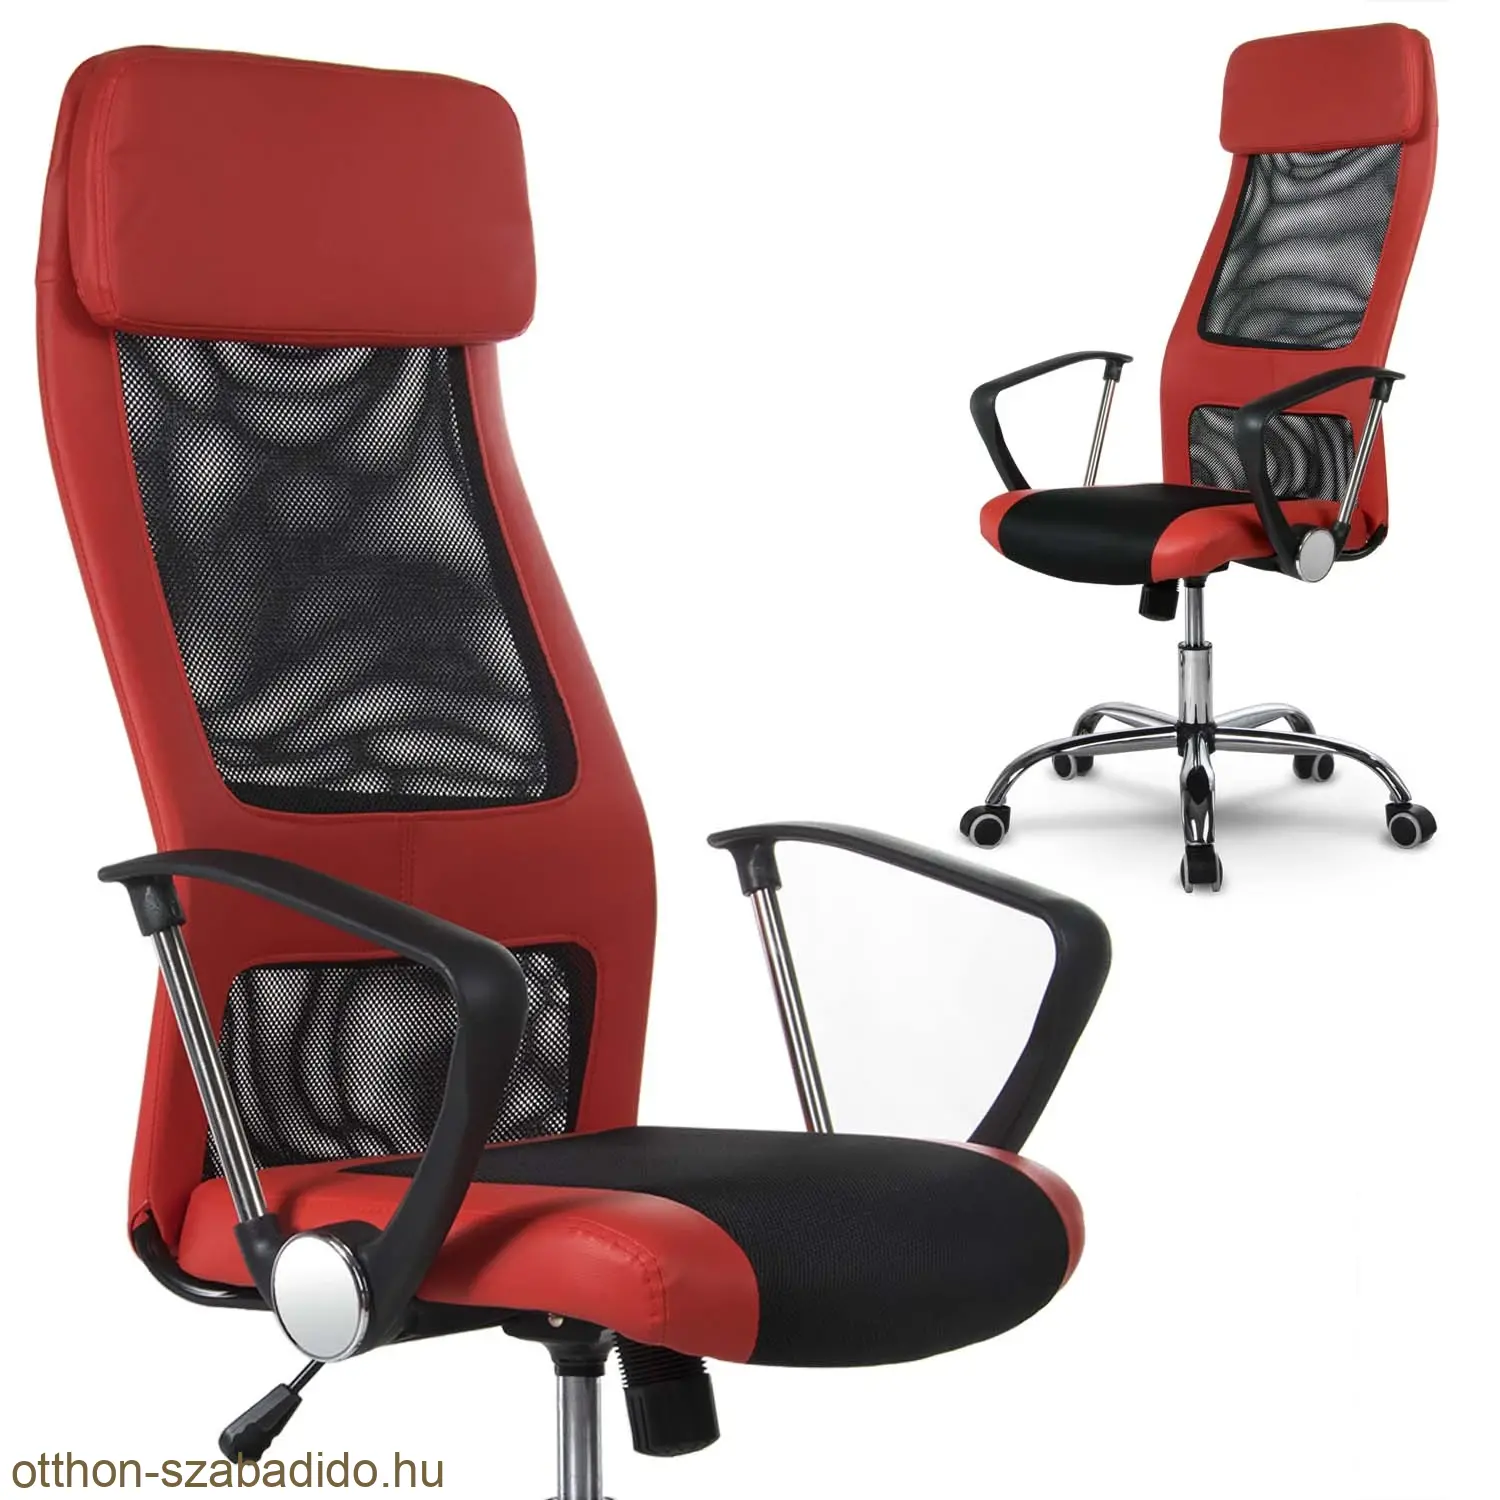 SOFOTEL magas modern irodai szék Rio piros